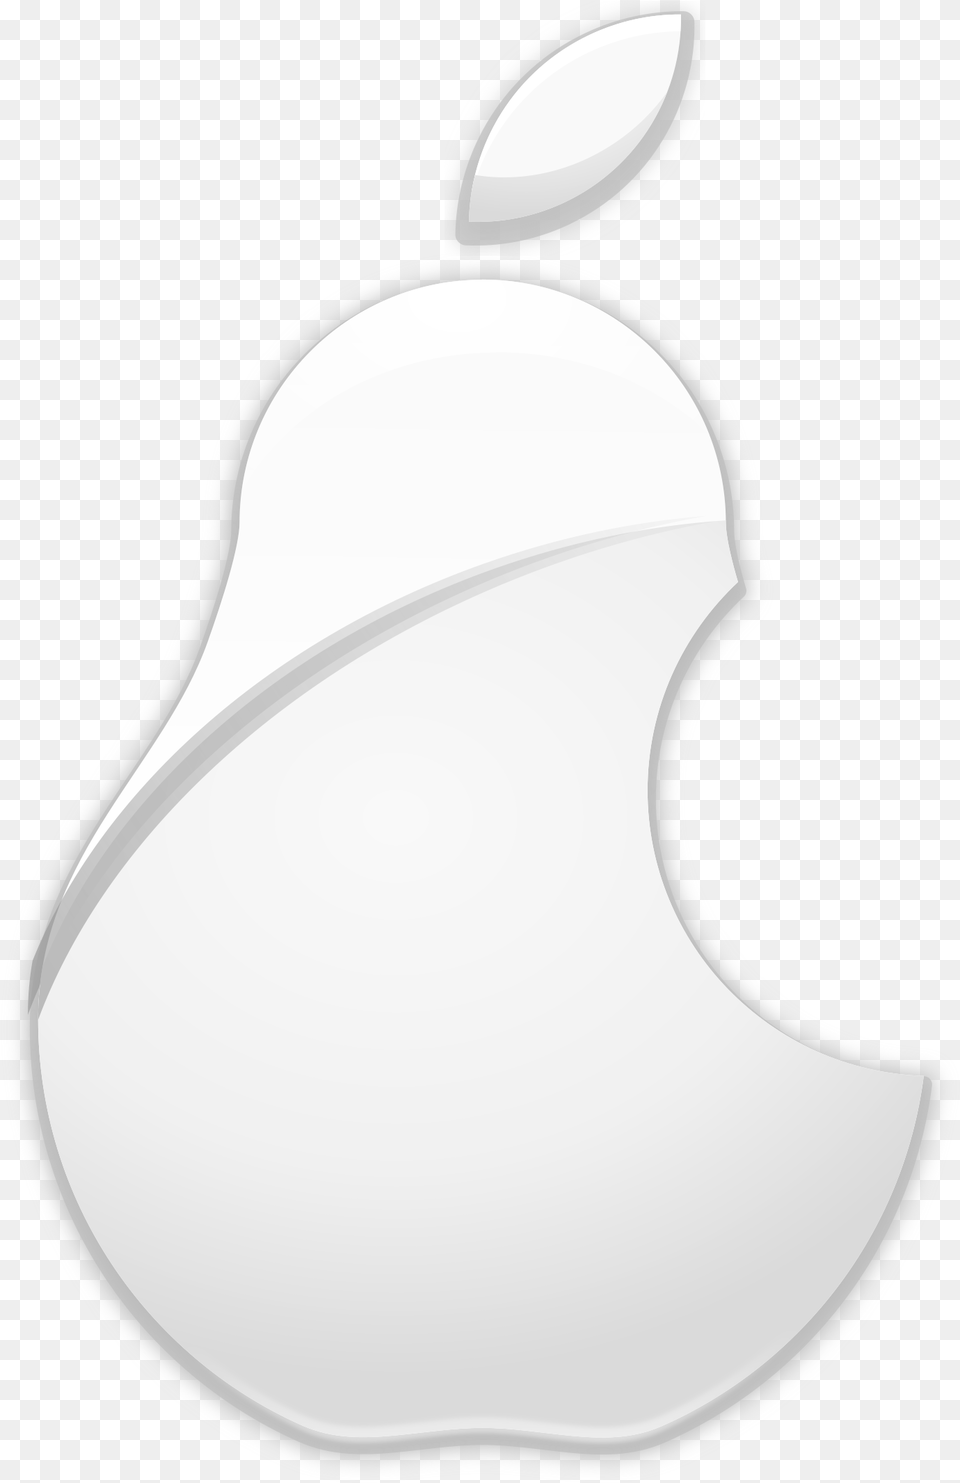 Pear Logo Clip Arts Apple Logo Transparente, Light, Lamp, Lighting Png